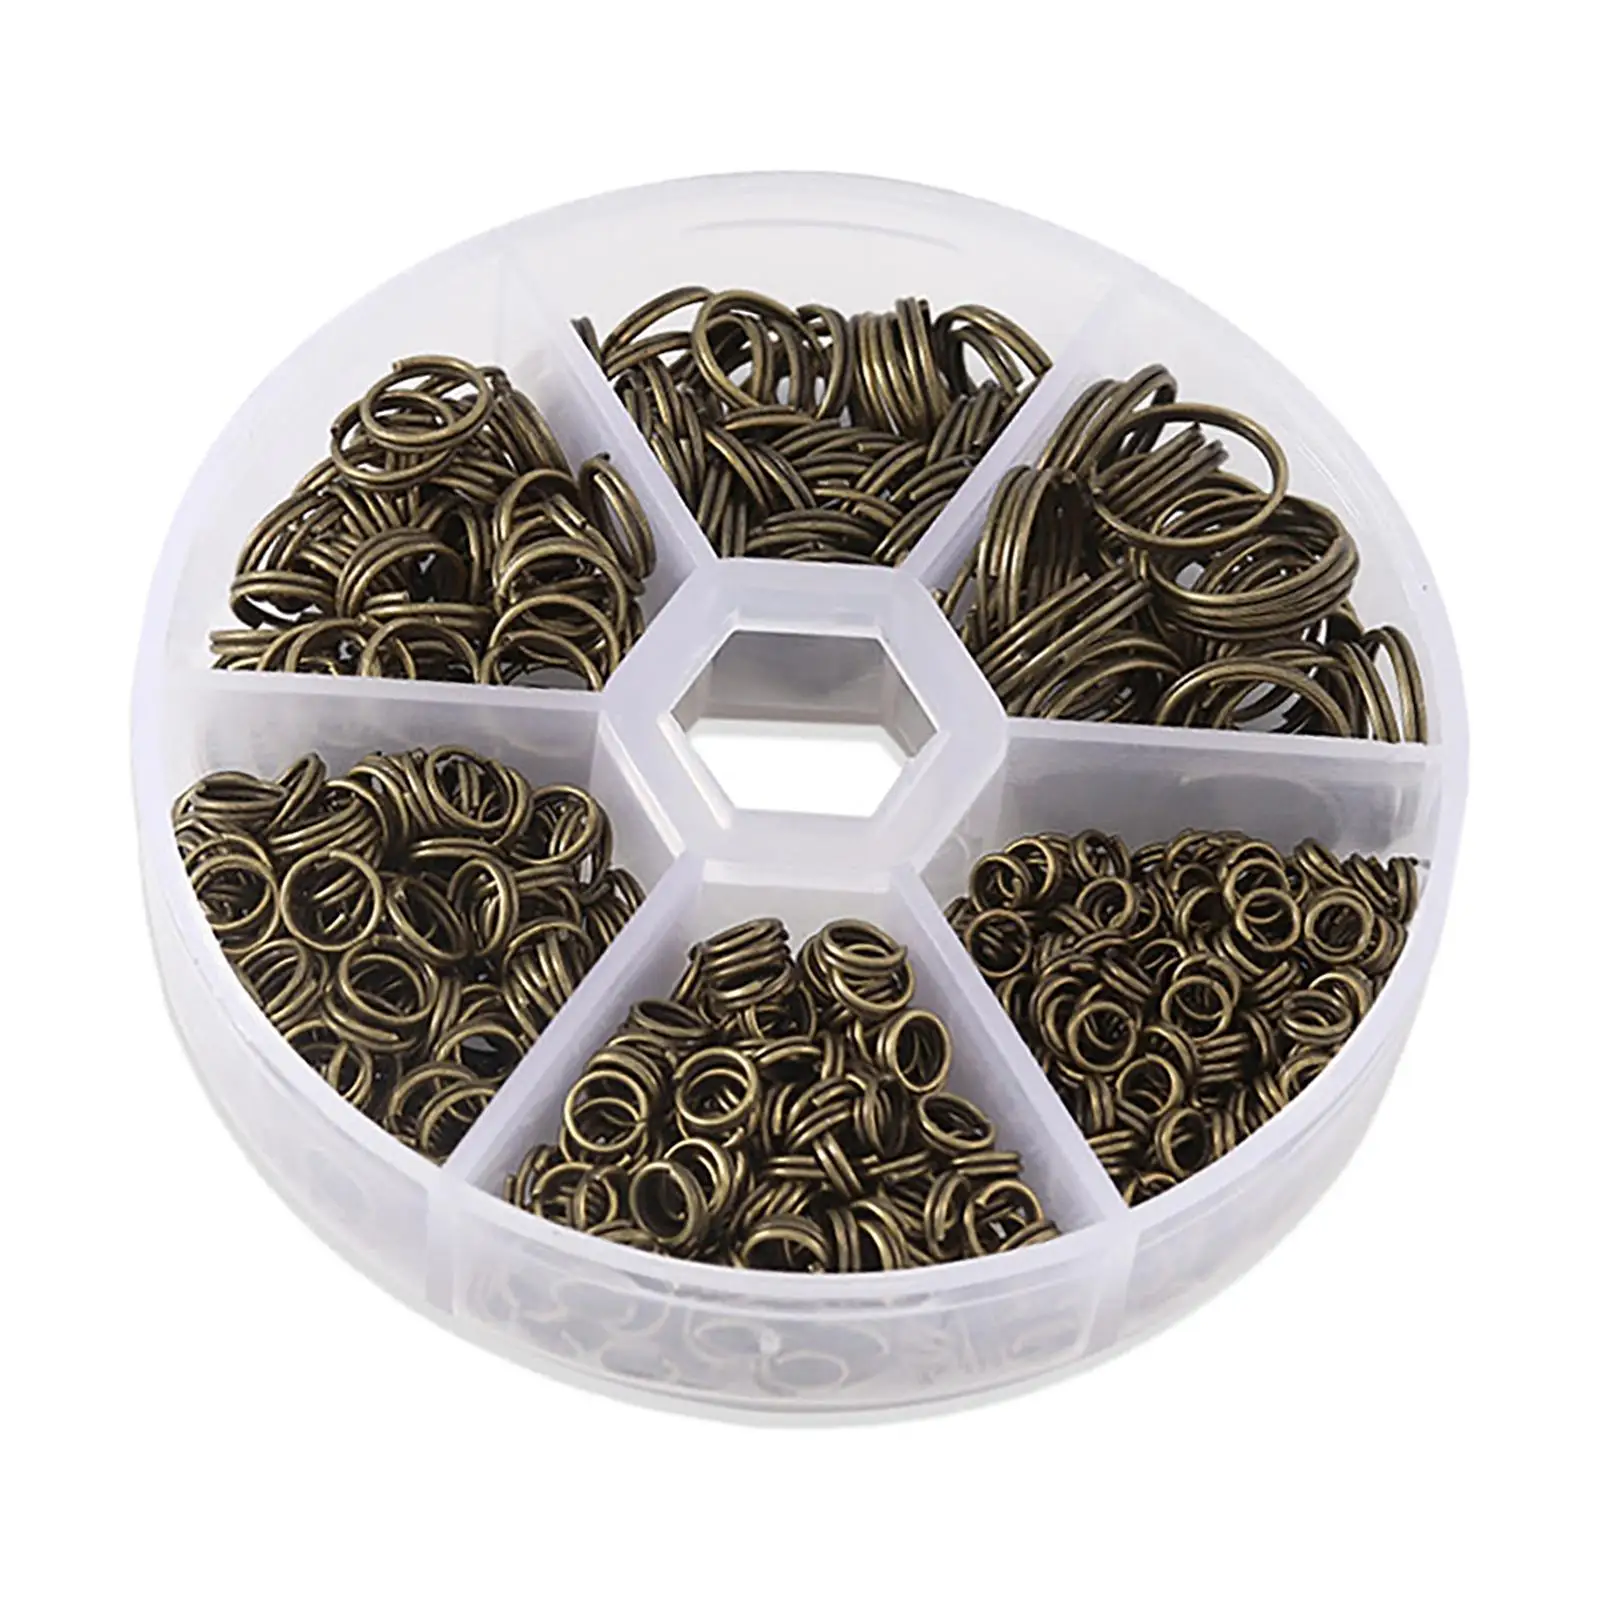  Chain Rings Kit, Round Key Rings, 4-12mm, Rustproof Metal Keyrings, for  Necklaces Jewelry Making Keys Organized 